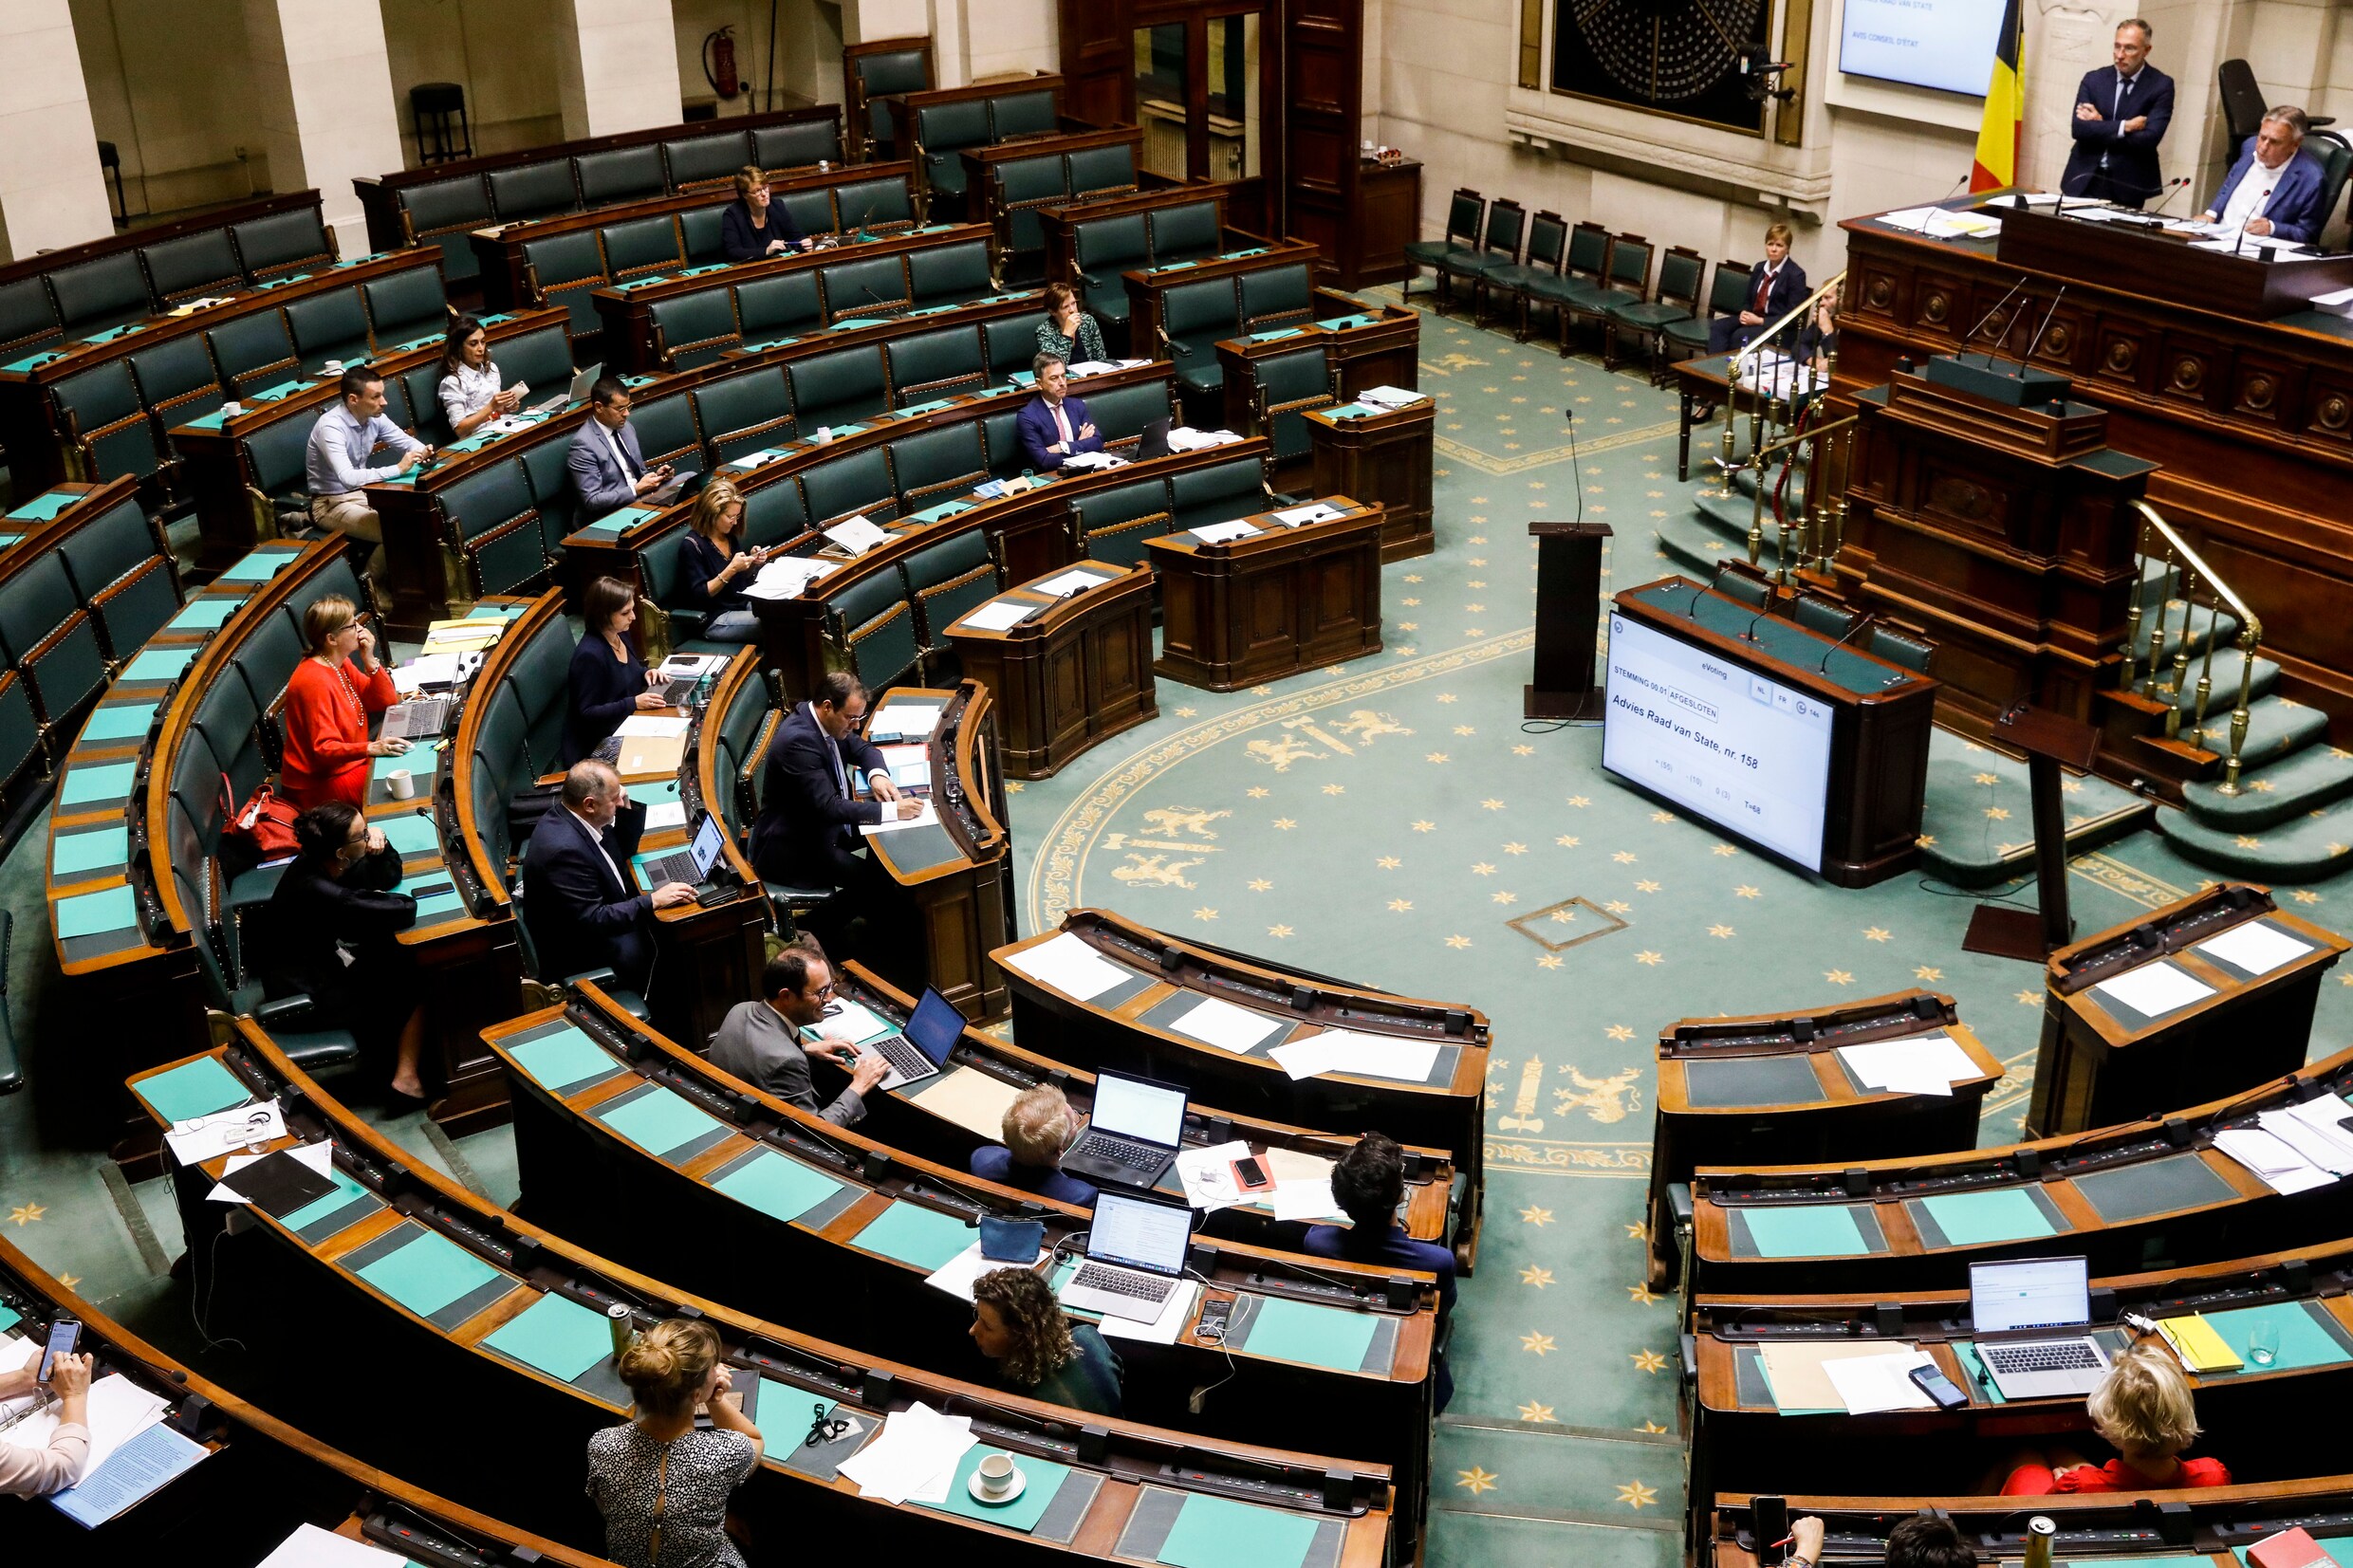 Raad van State geeft positief advies voor uitbreiding abortus: volgende week nieuwe poging tot stemming in Kamer?